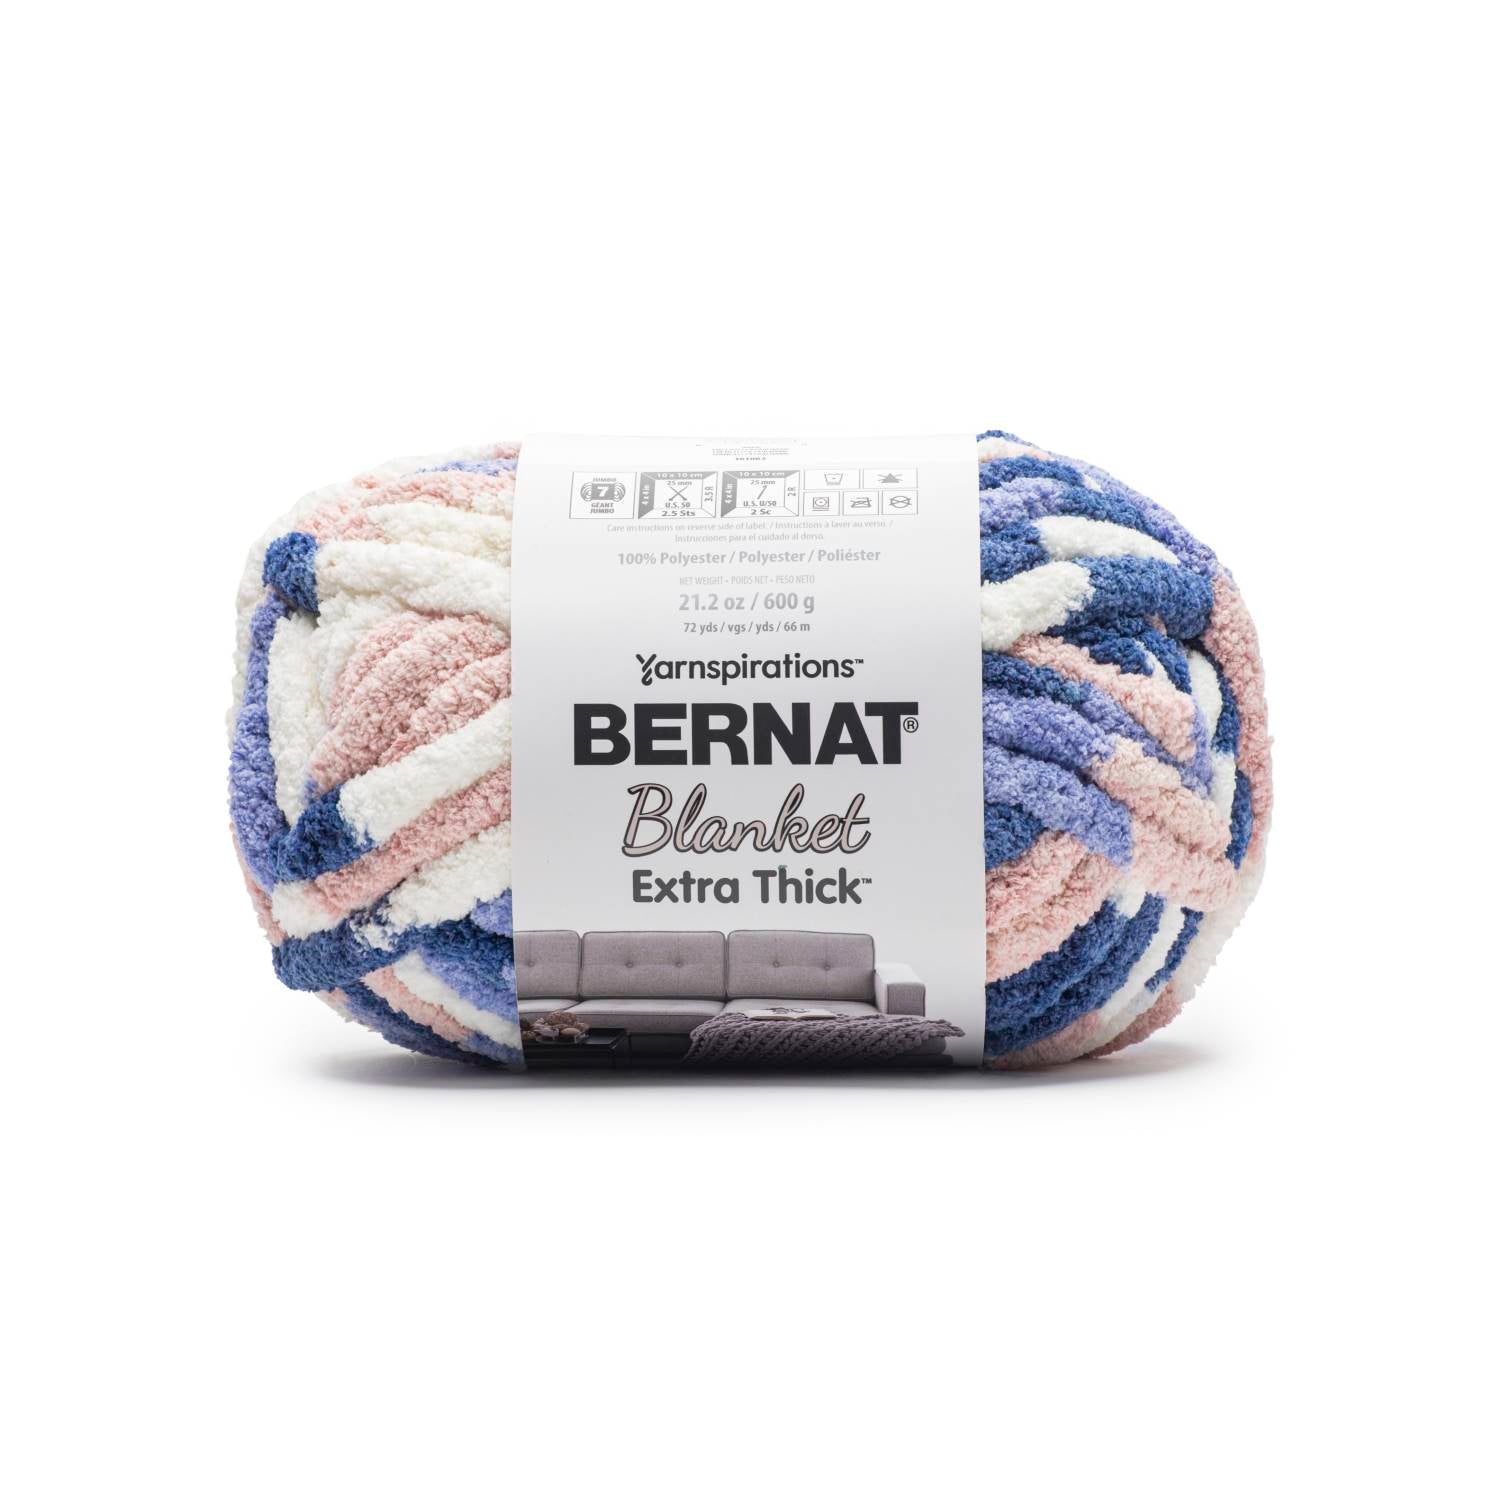 Bernat Blanket Extra Thick Yarn (600g/21.2oz) - Discontinued Shades Blueberry Peach